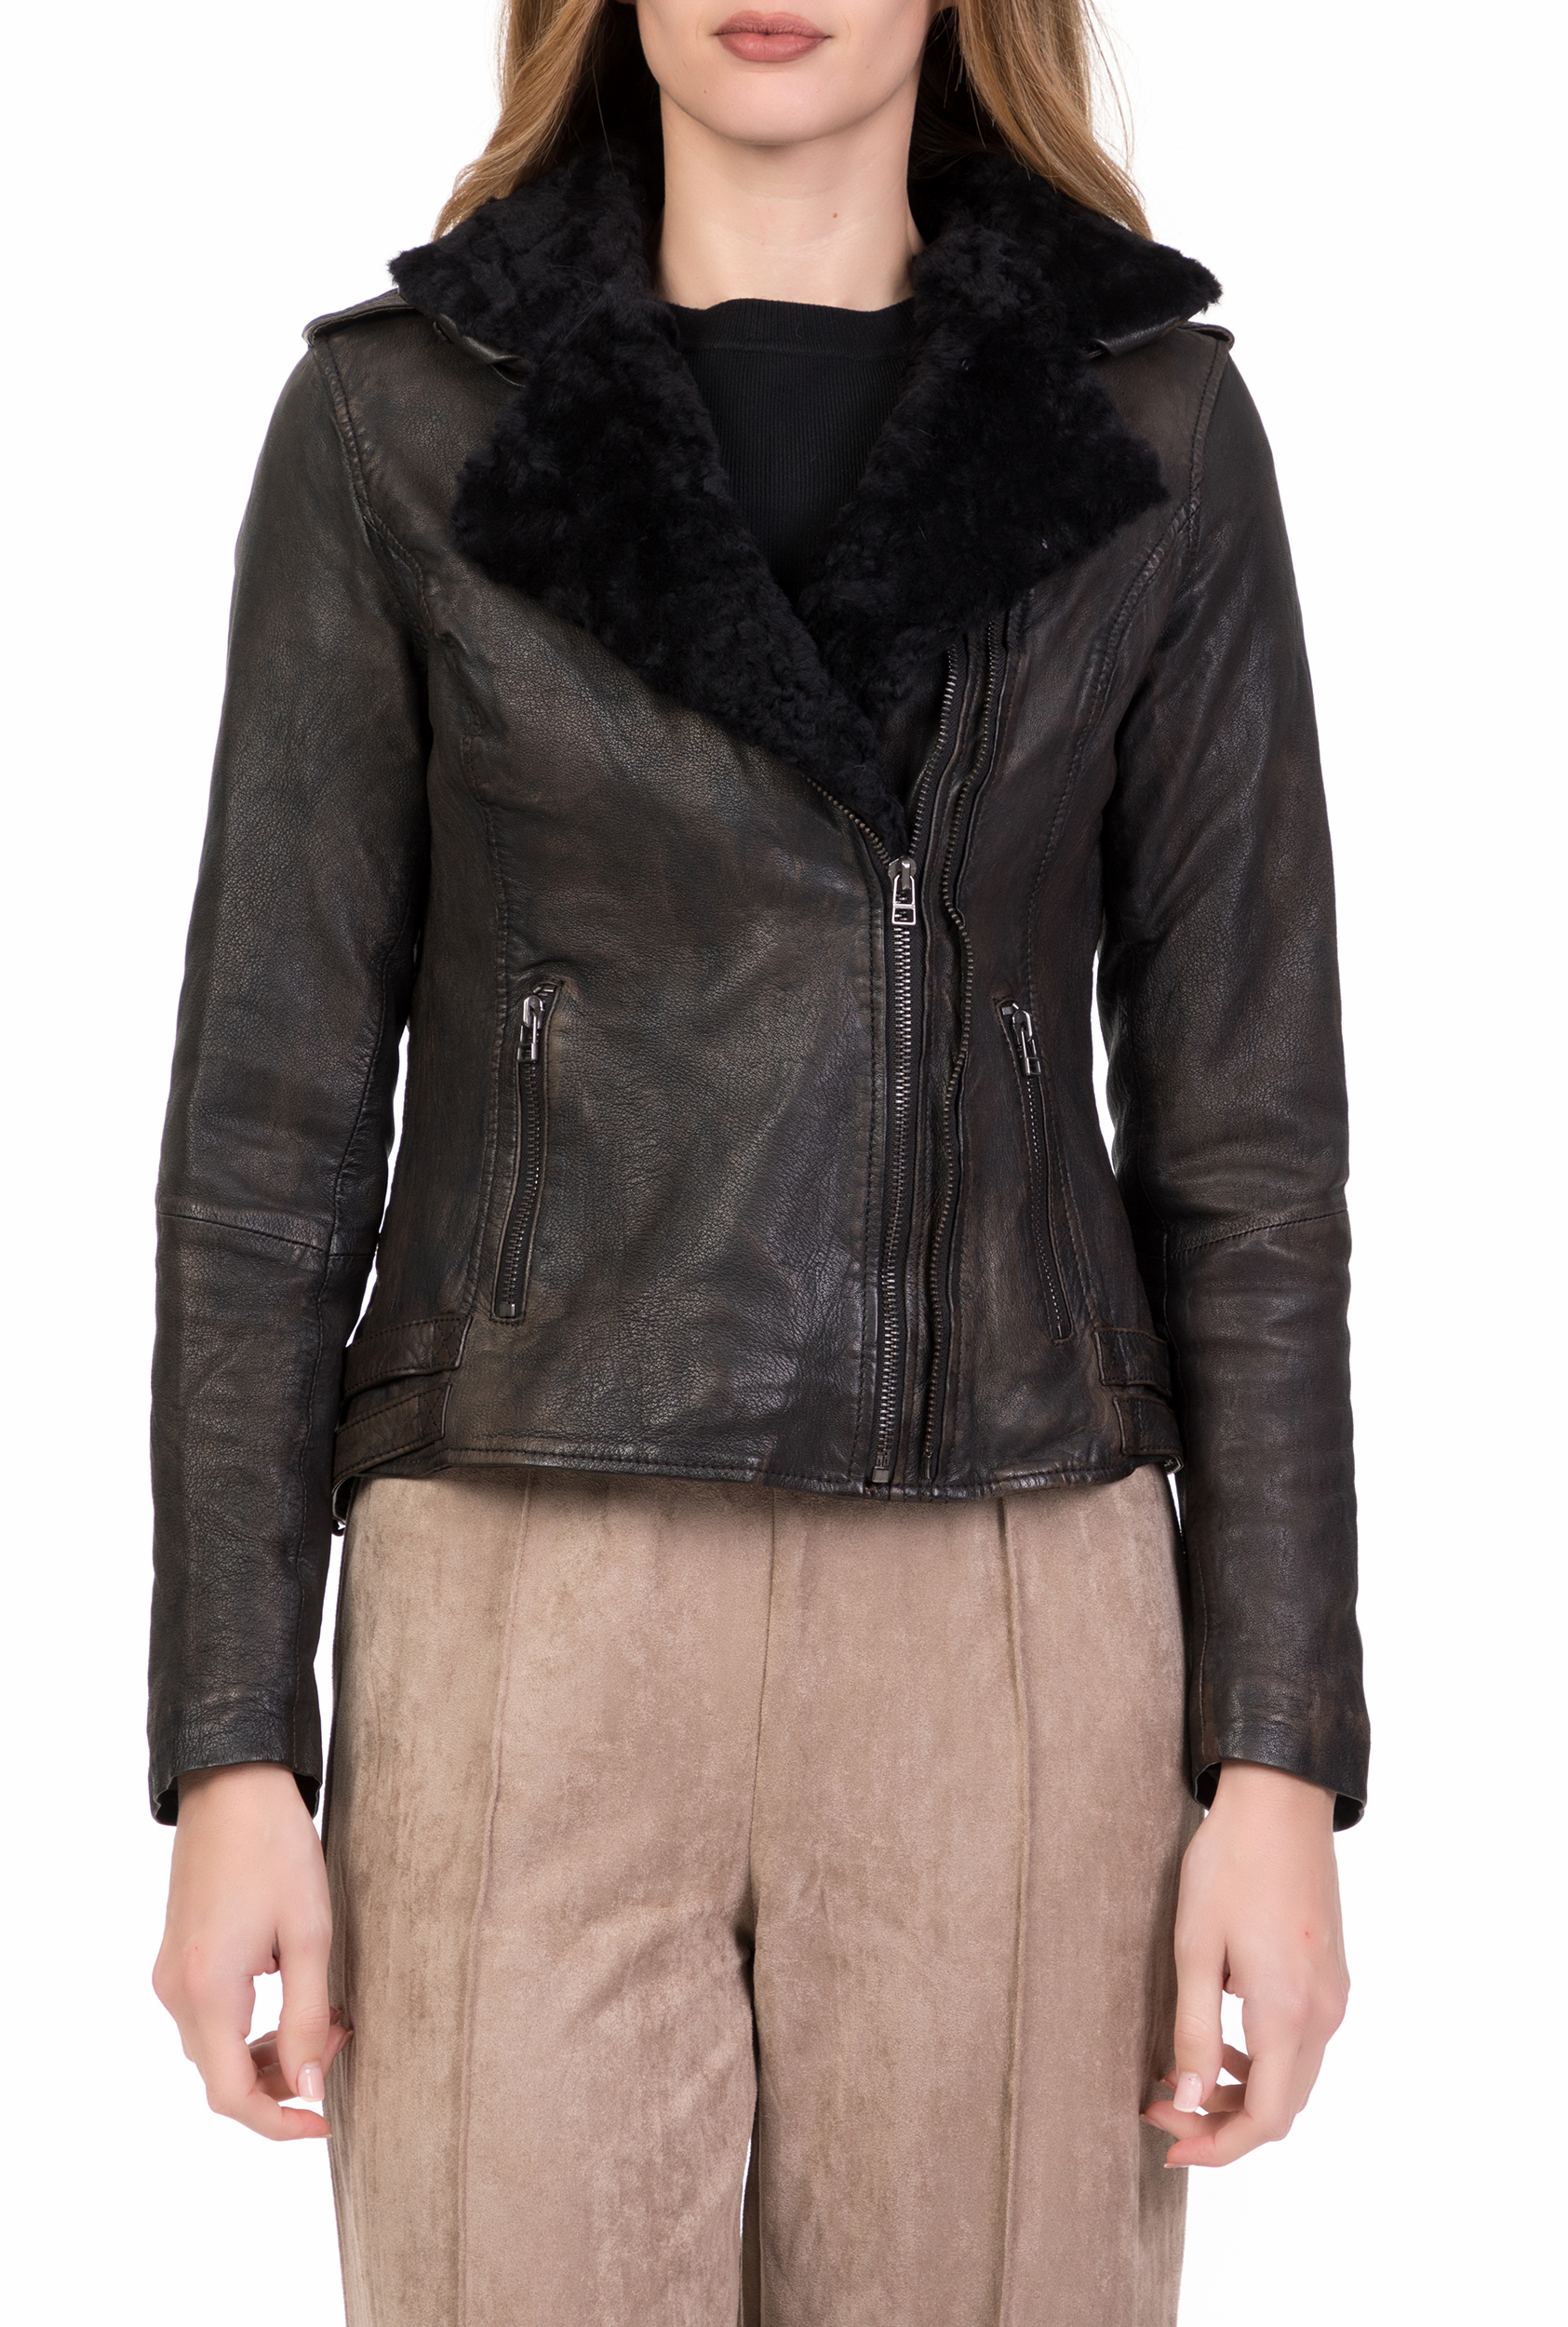 GOOSECRAFT – Γυναικειο δερματινο jacket με γουνακι BIKER497 GOOSECRAFT καφε